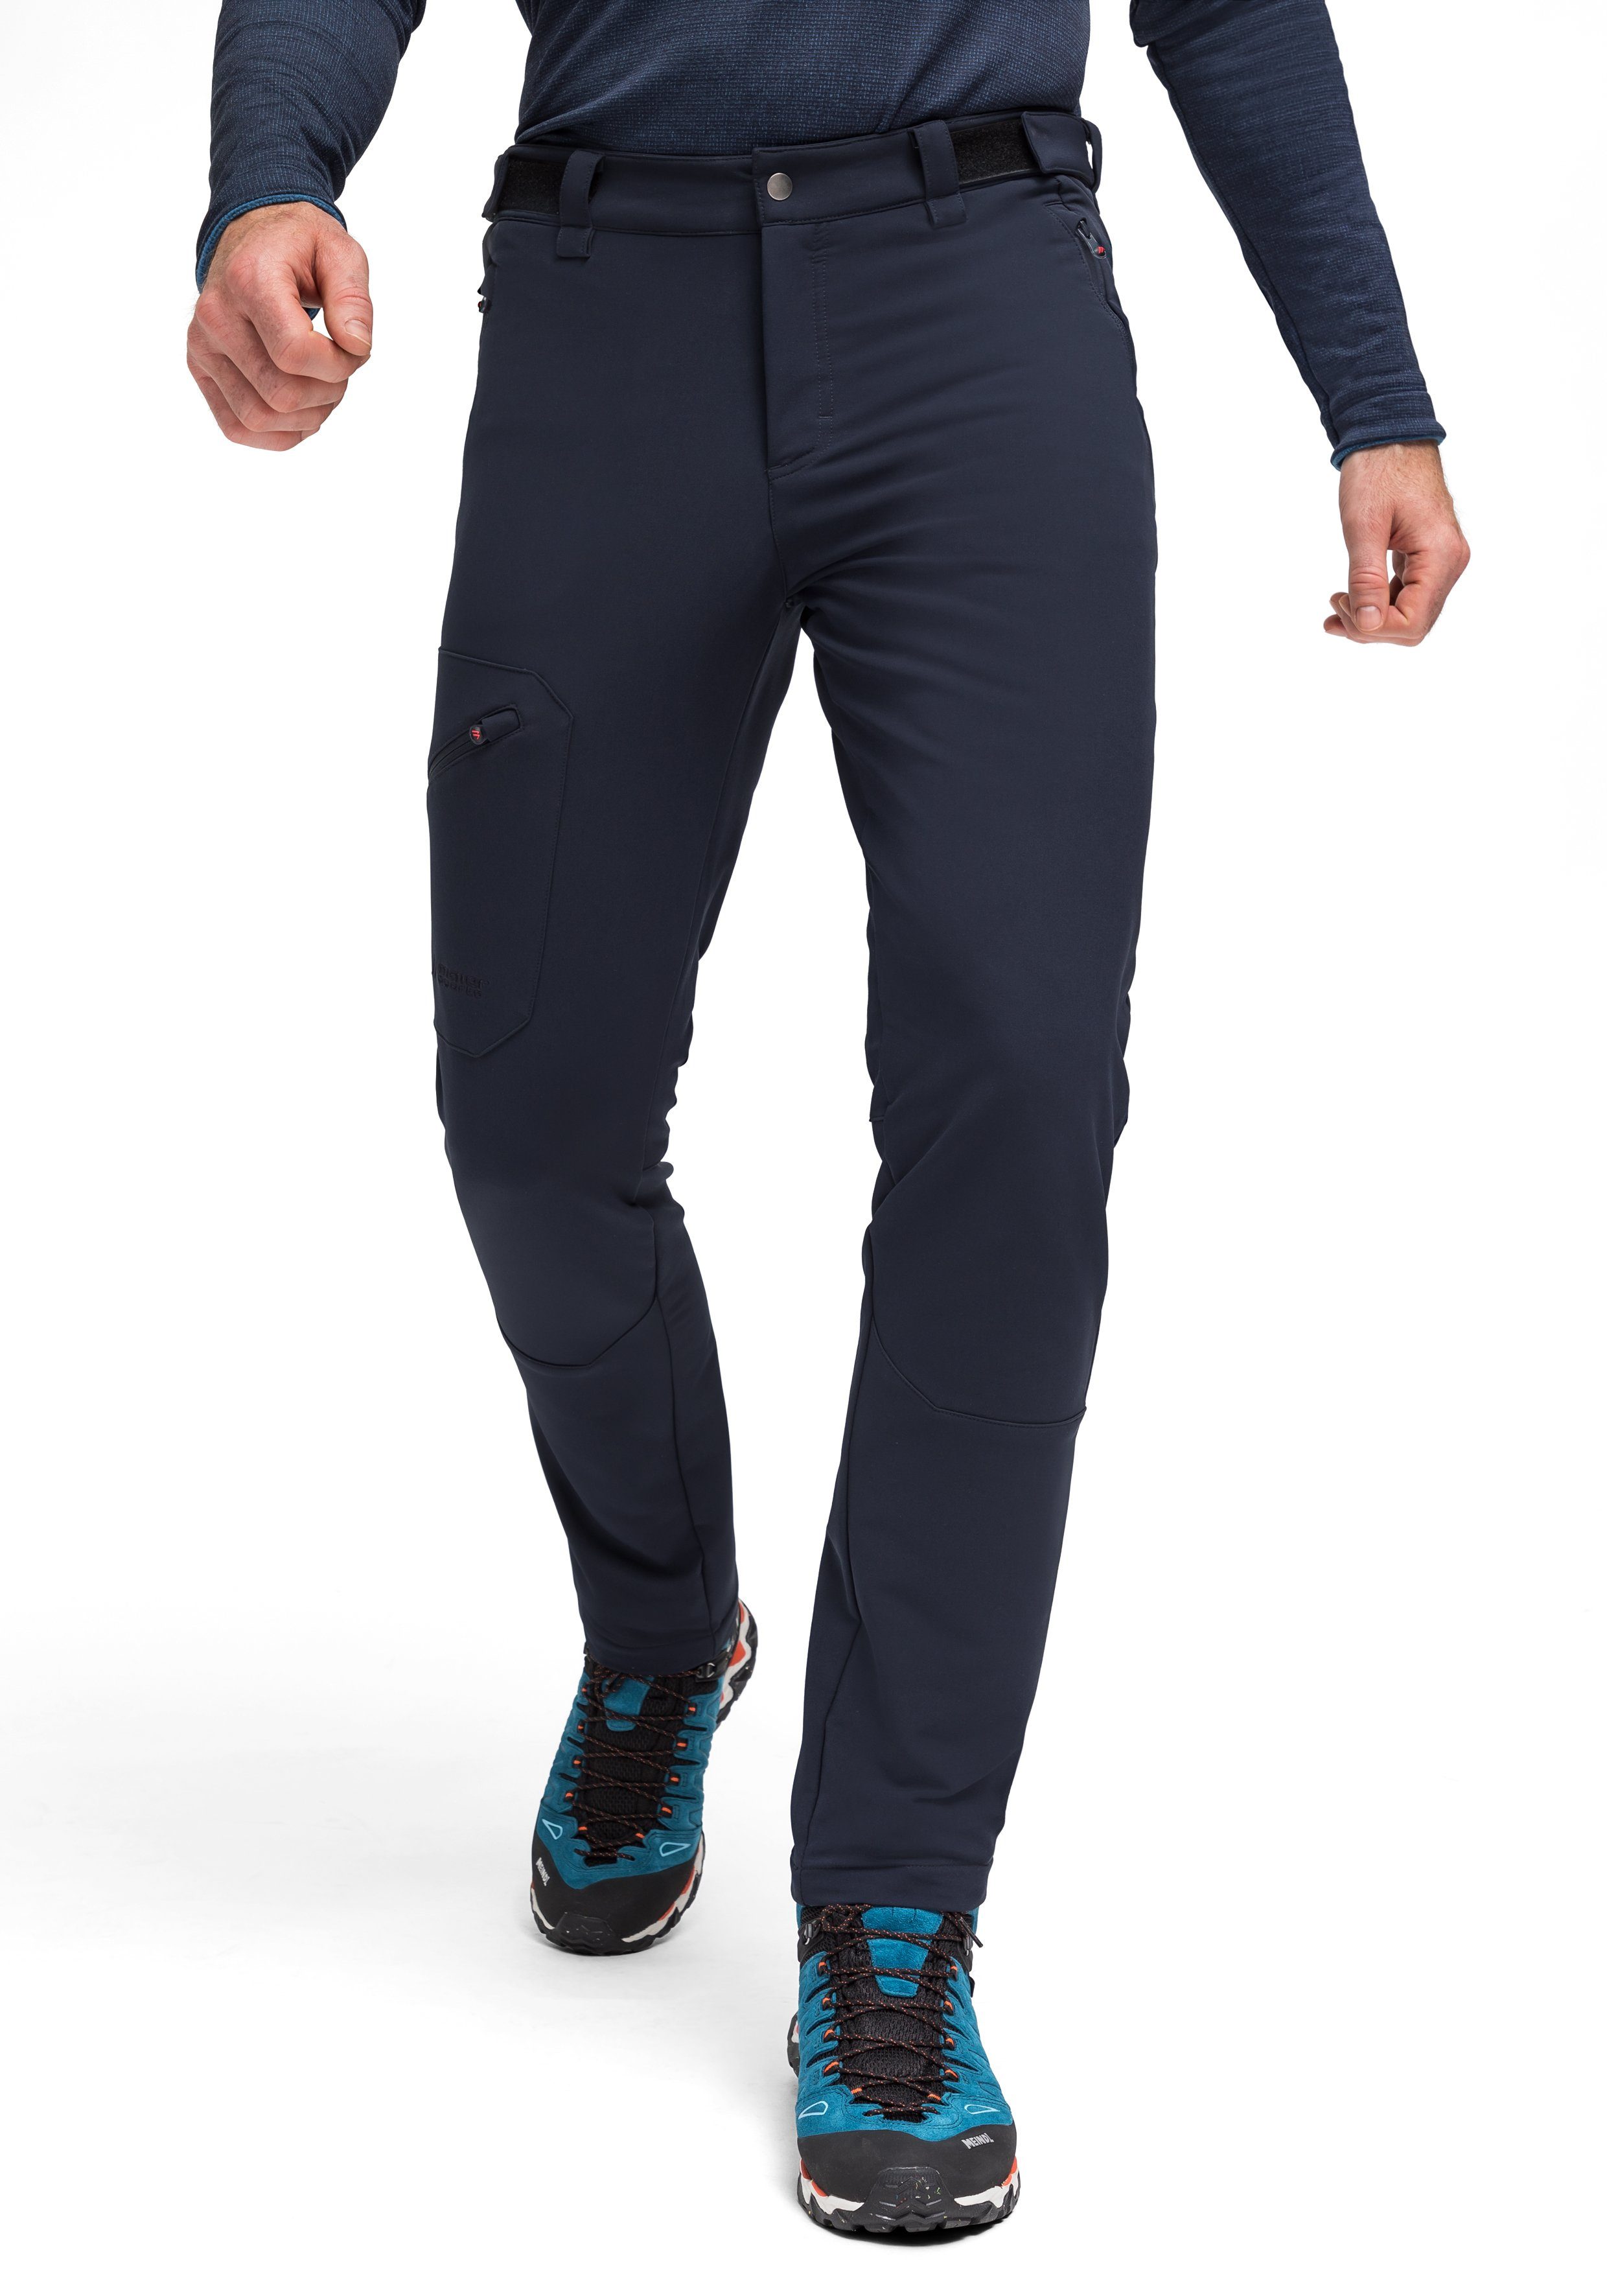 Look im Warme, Foidit M elastische Funktionshose Maier Sports Outdoorhose dunkelblau cleanen modernen